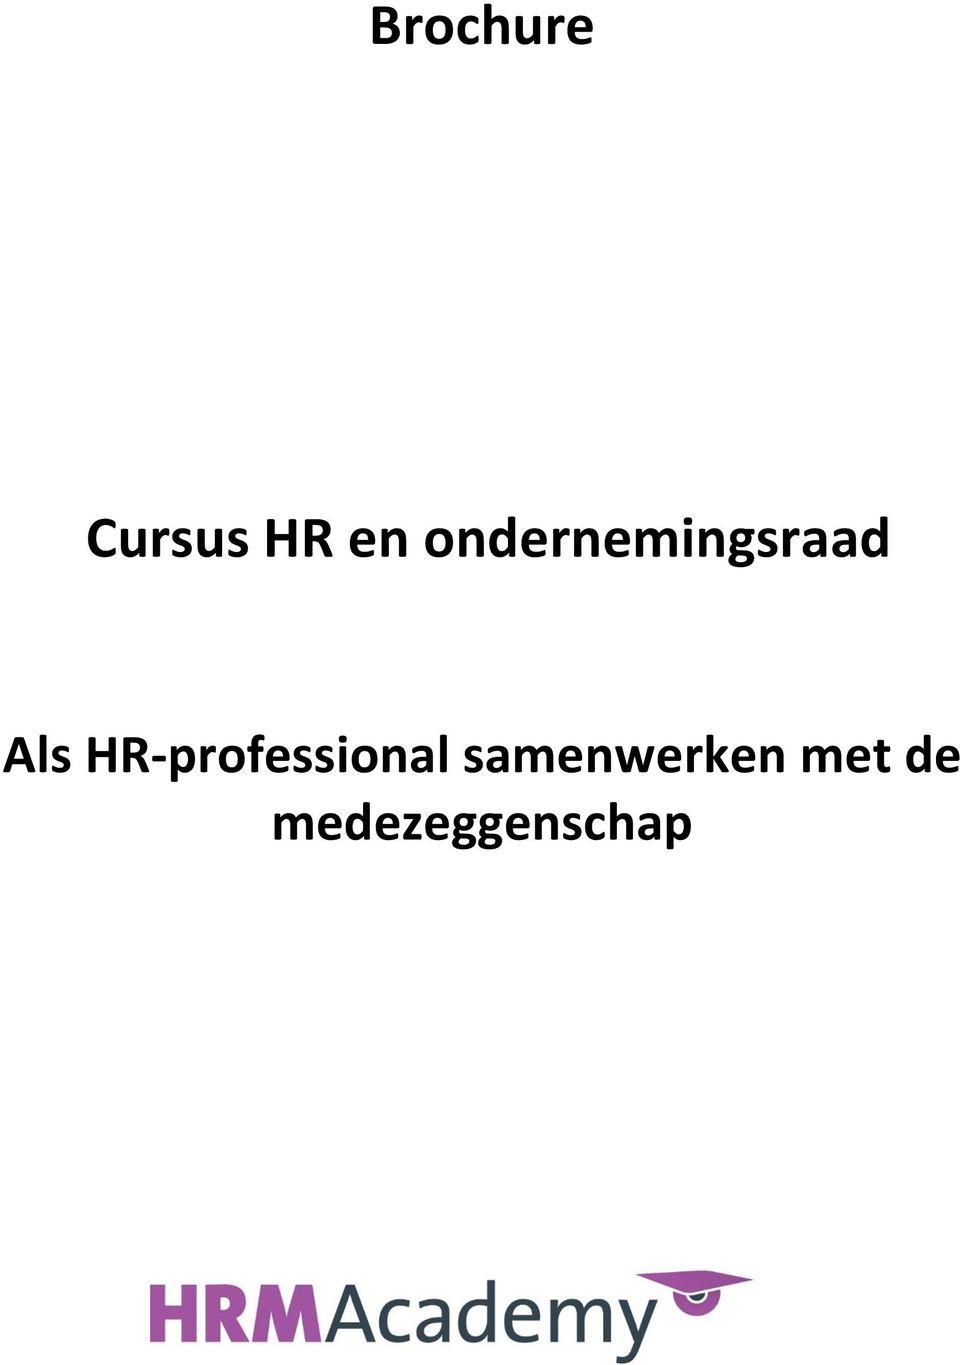 HR-professional